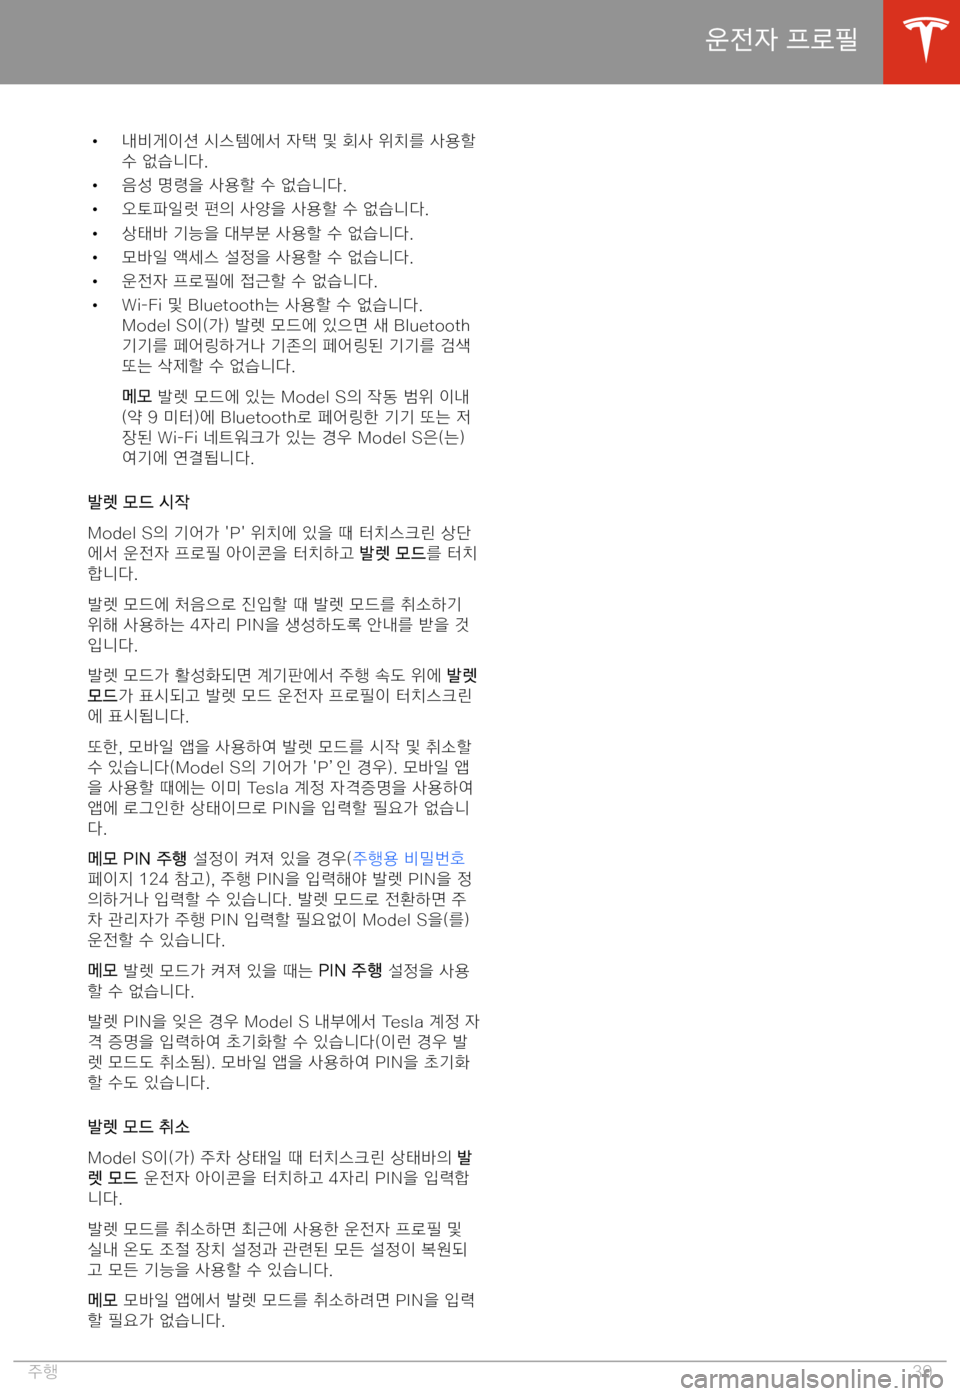 TESLA MODEL S 2020  사용자 가이드 (in Korean) H 	